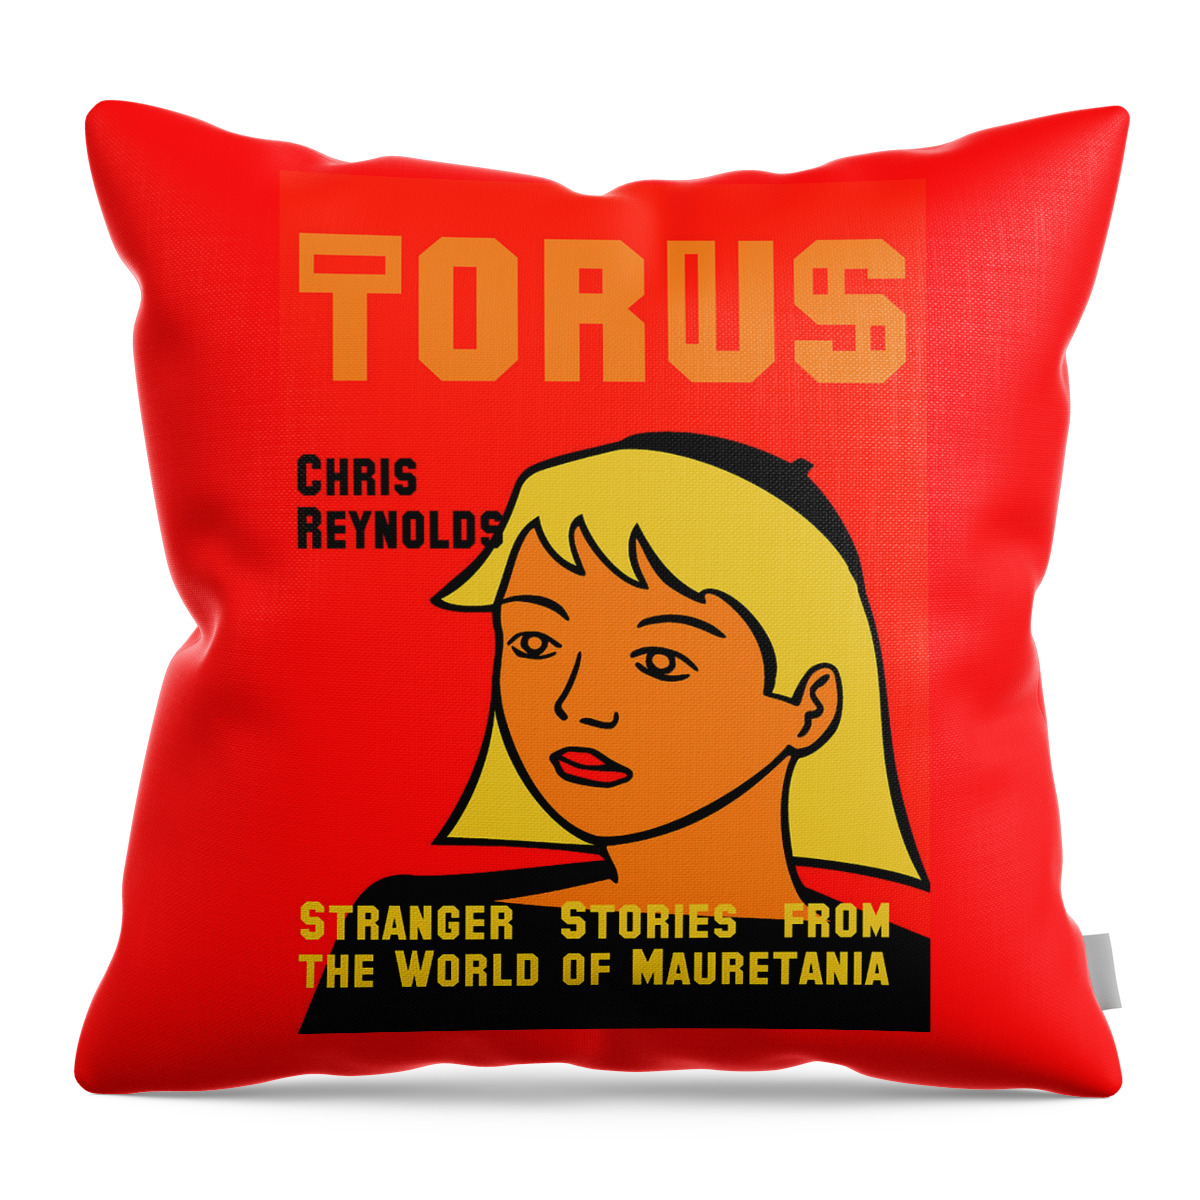 Mauretania Comics Throw Pillow featuring the digital art Torus by Chris Reynolds